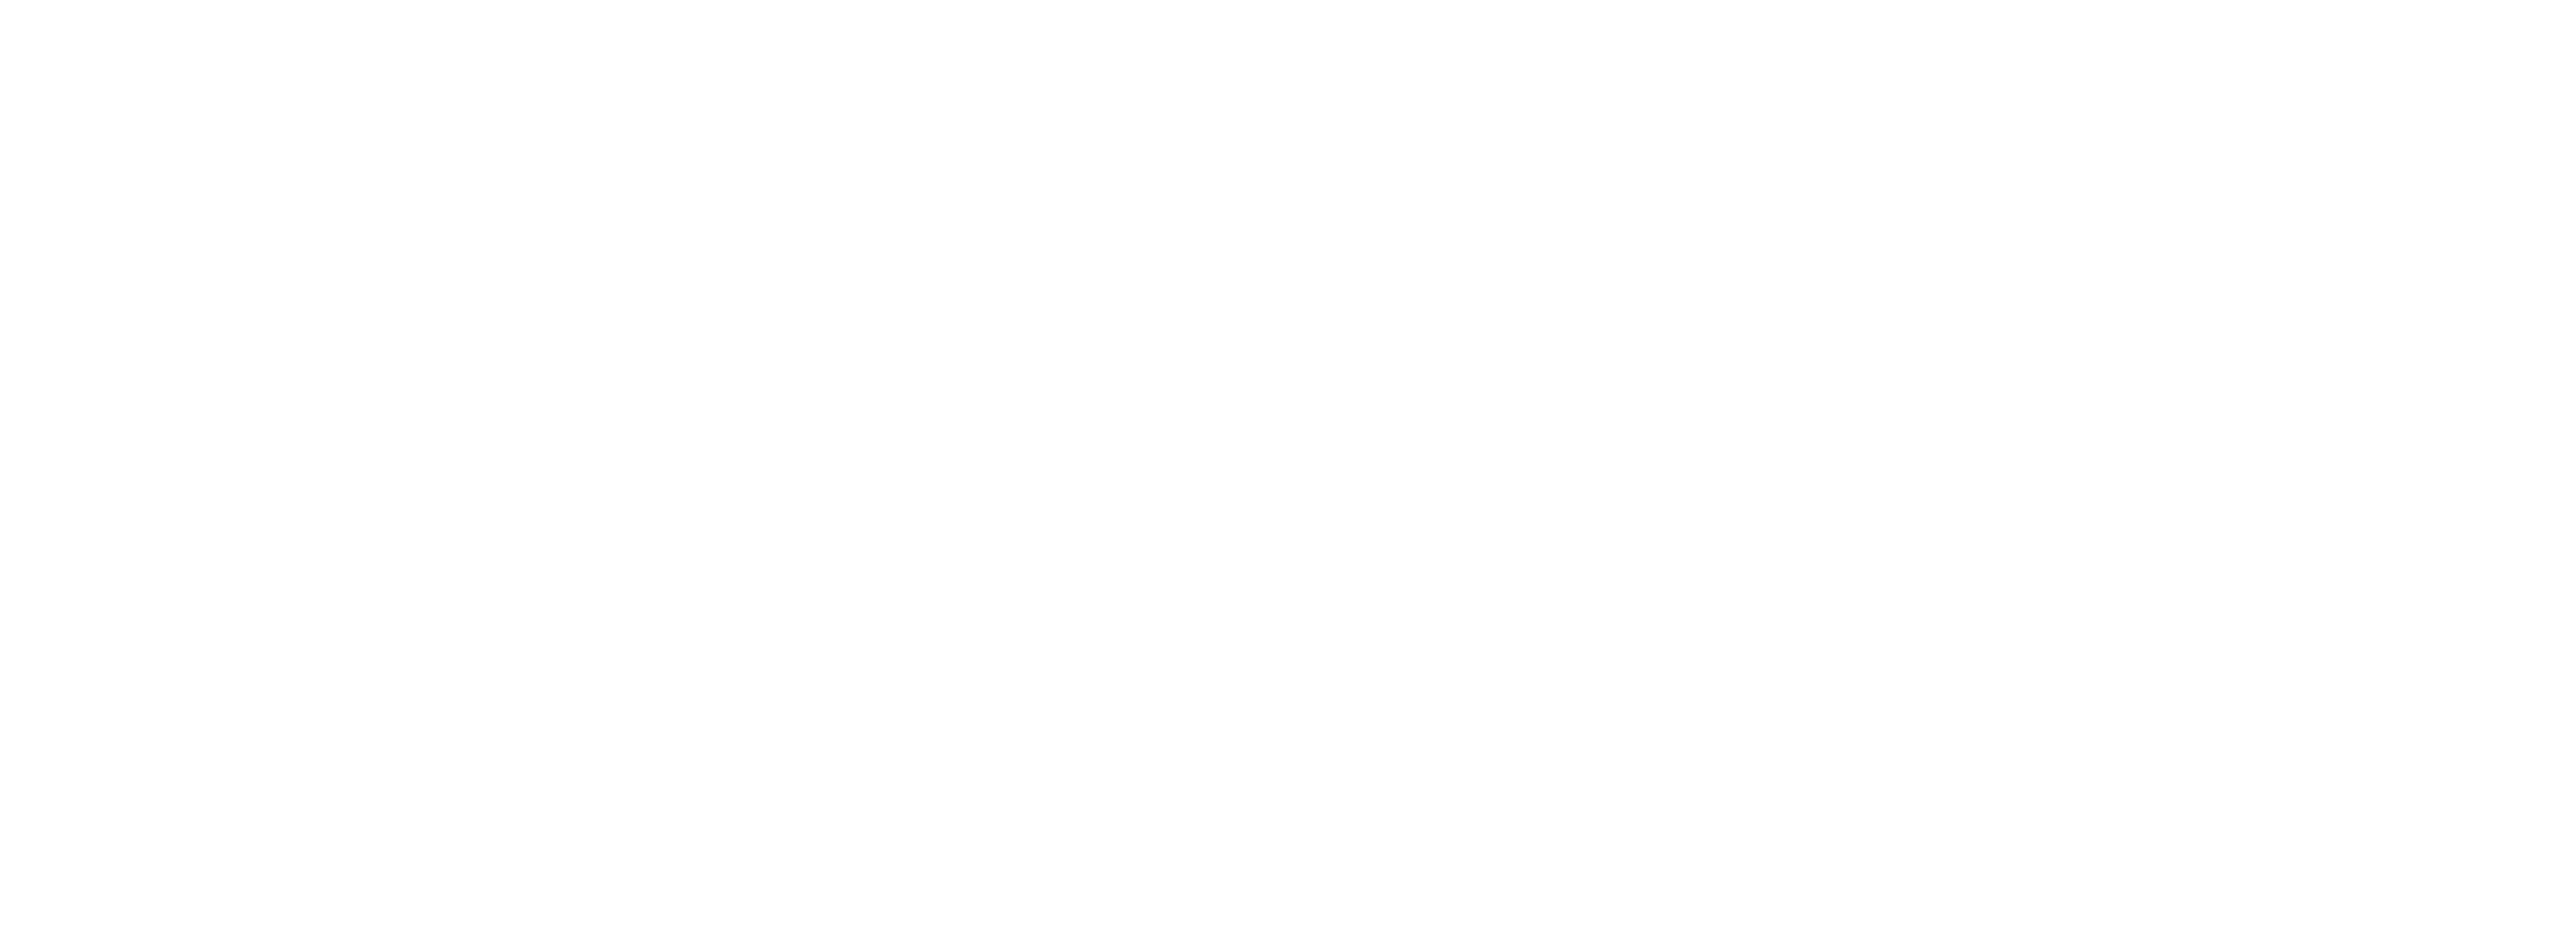 School Of Consent logo white